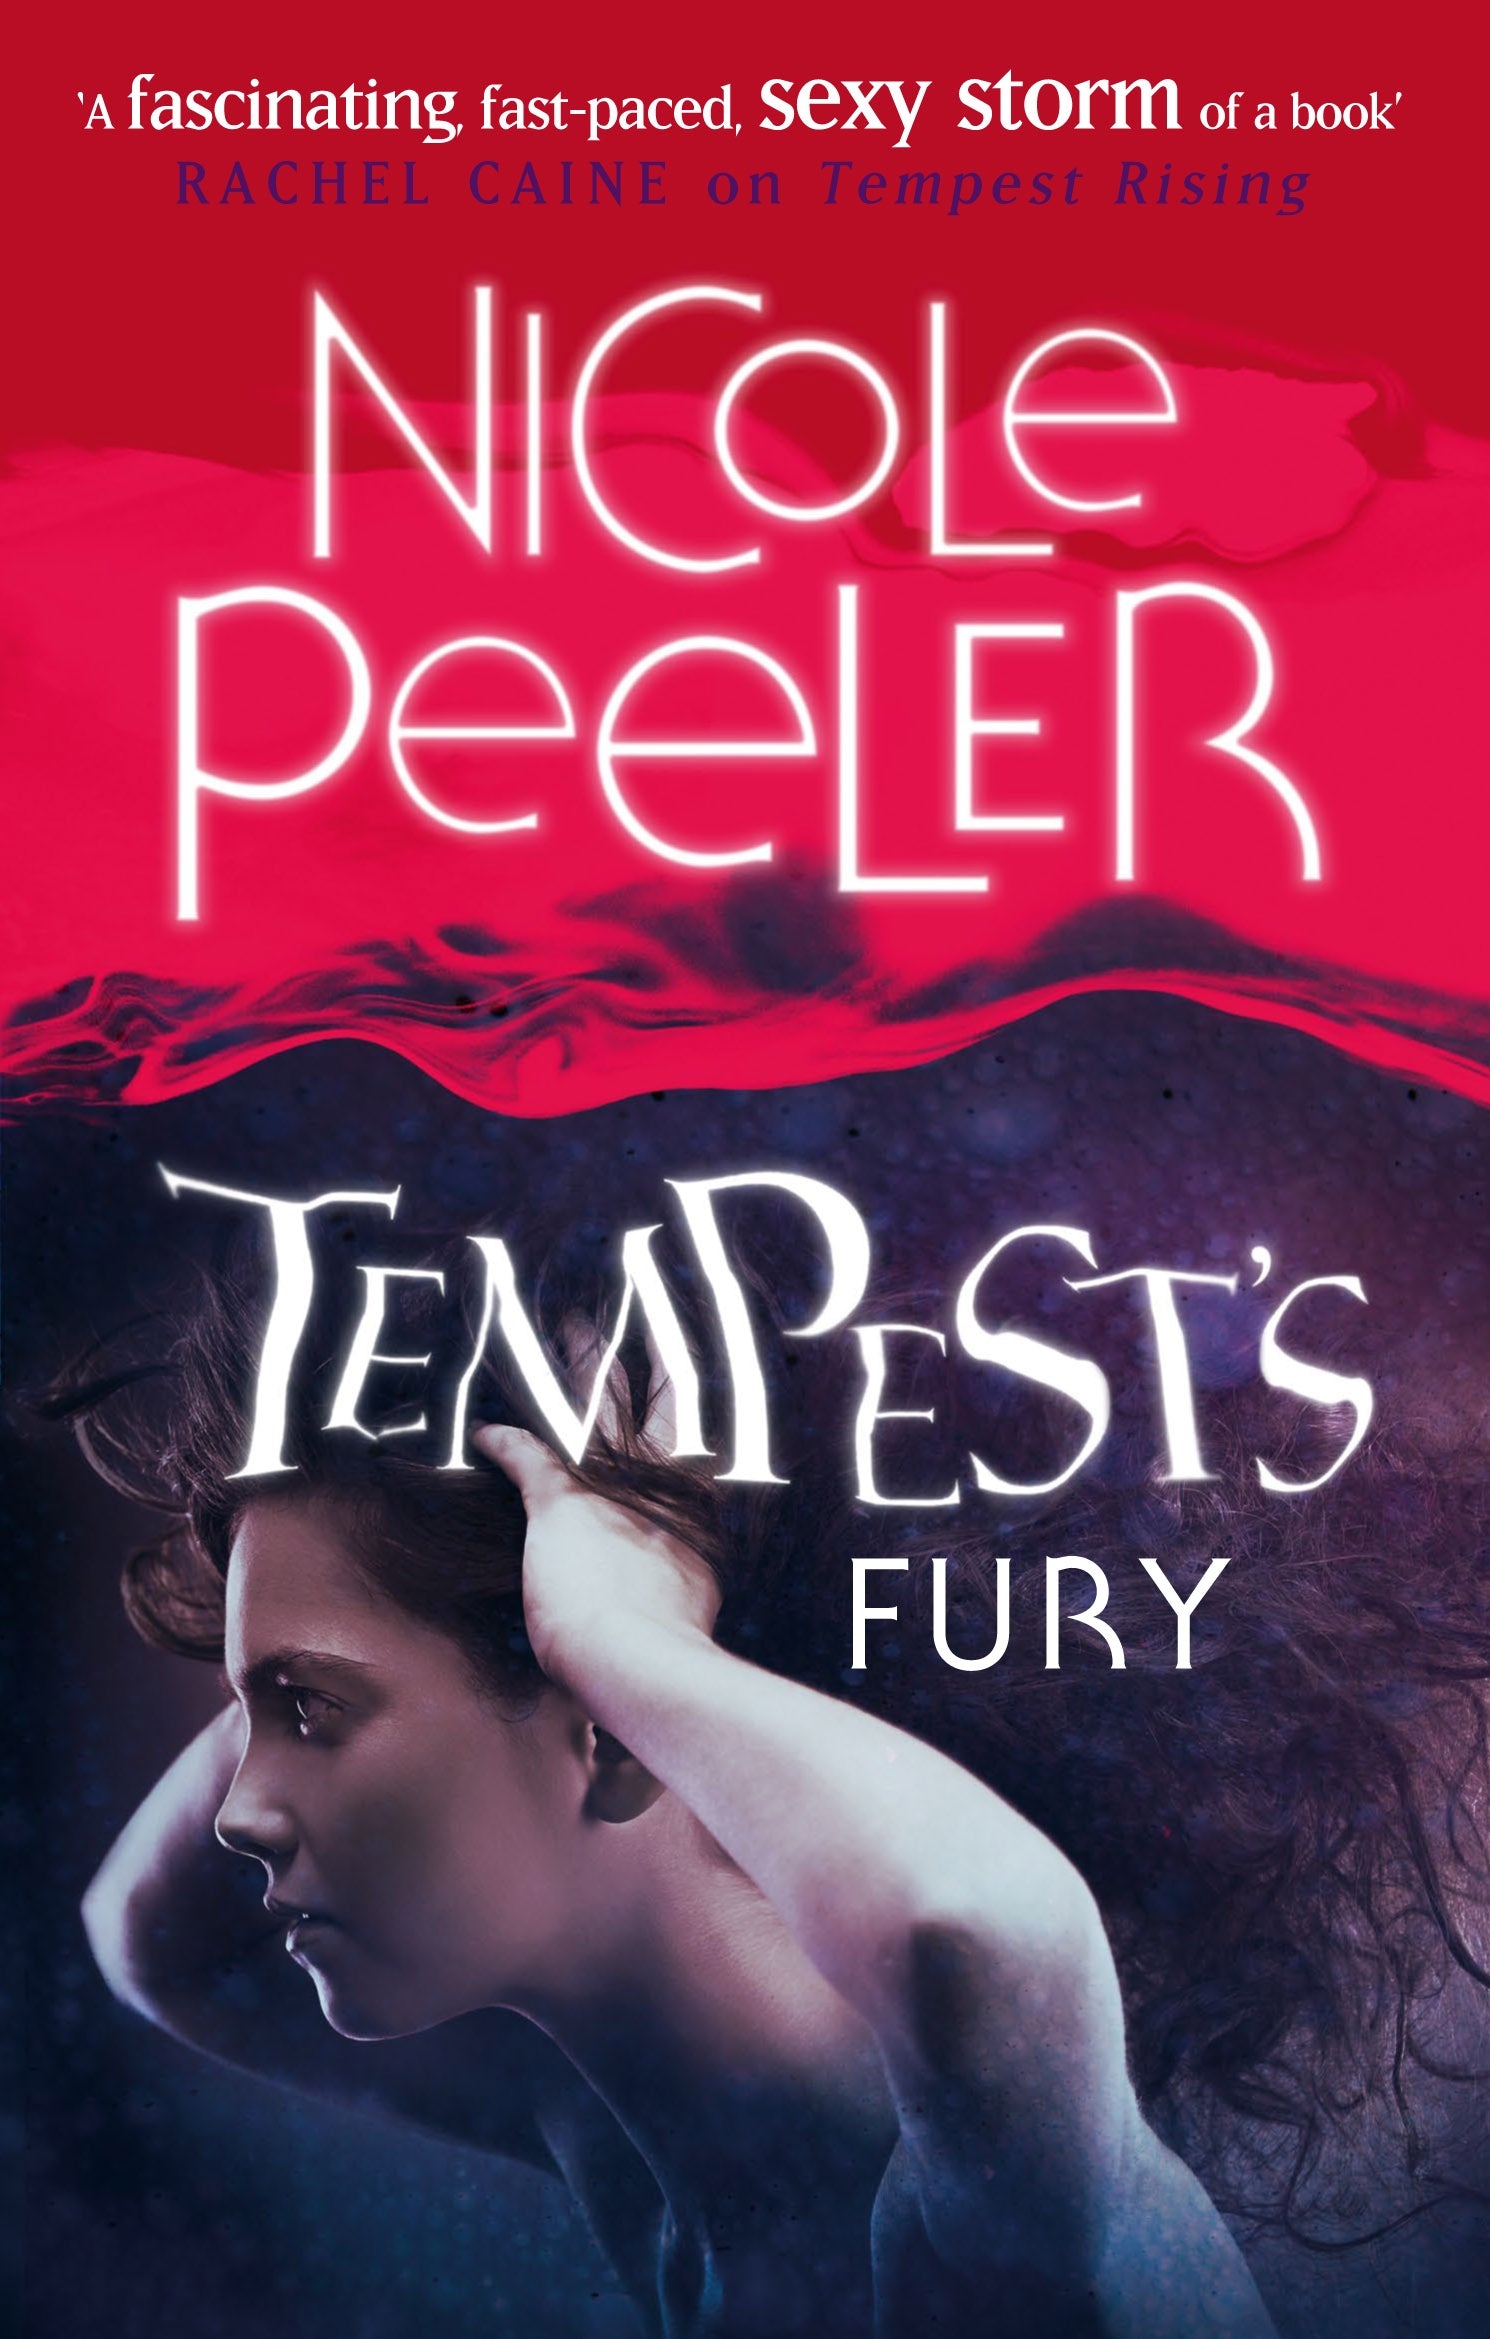 Tempest's Fury by Nicole Peeler